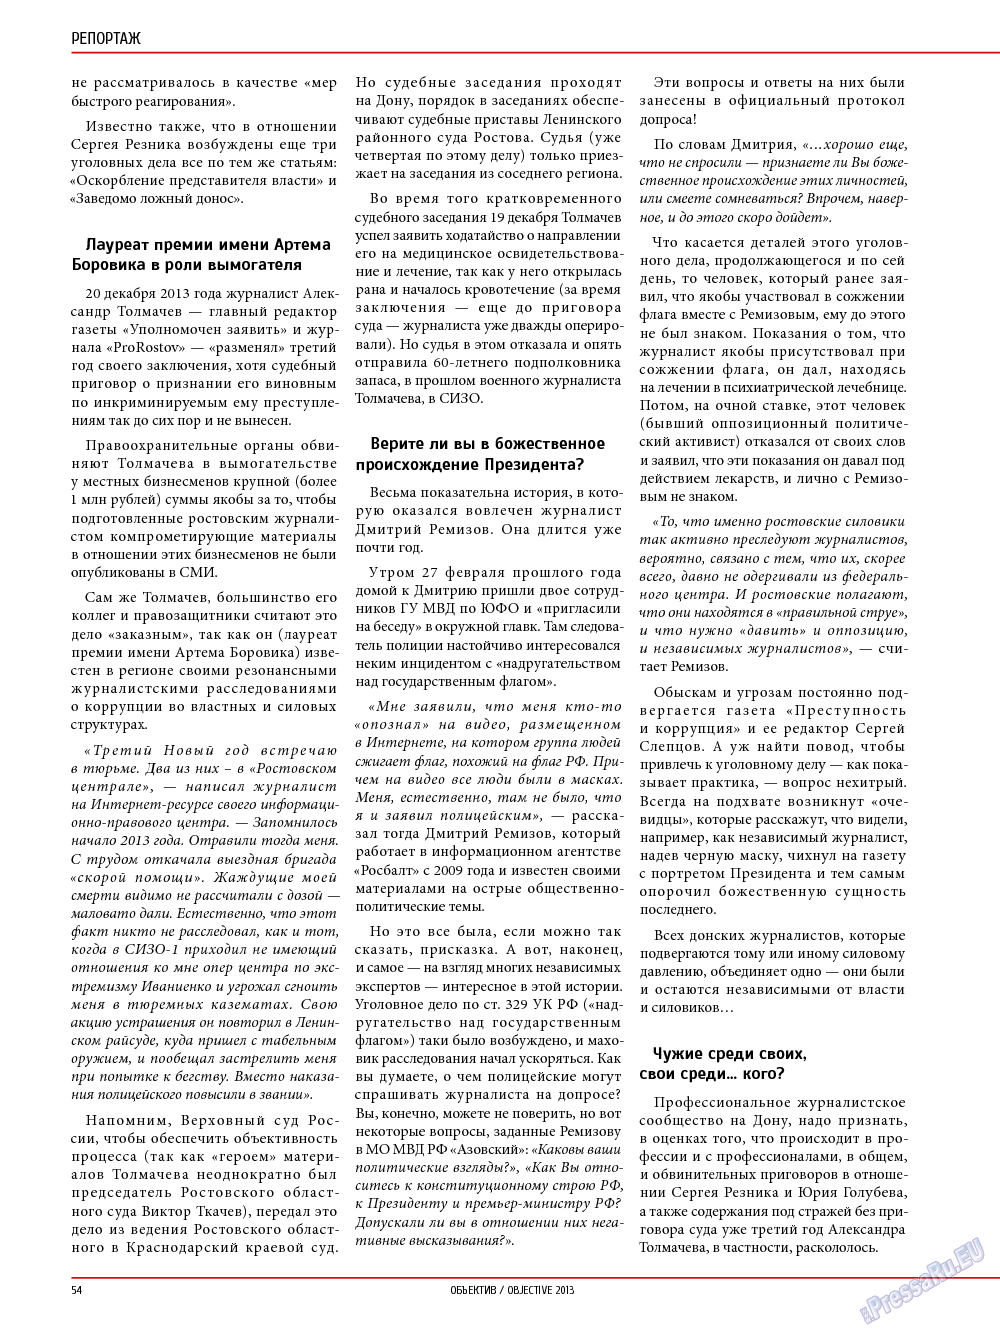 Объектив EU, журнал. 2014 №1 стр.54